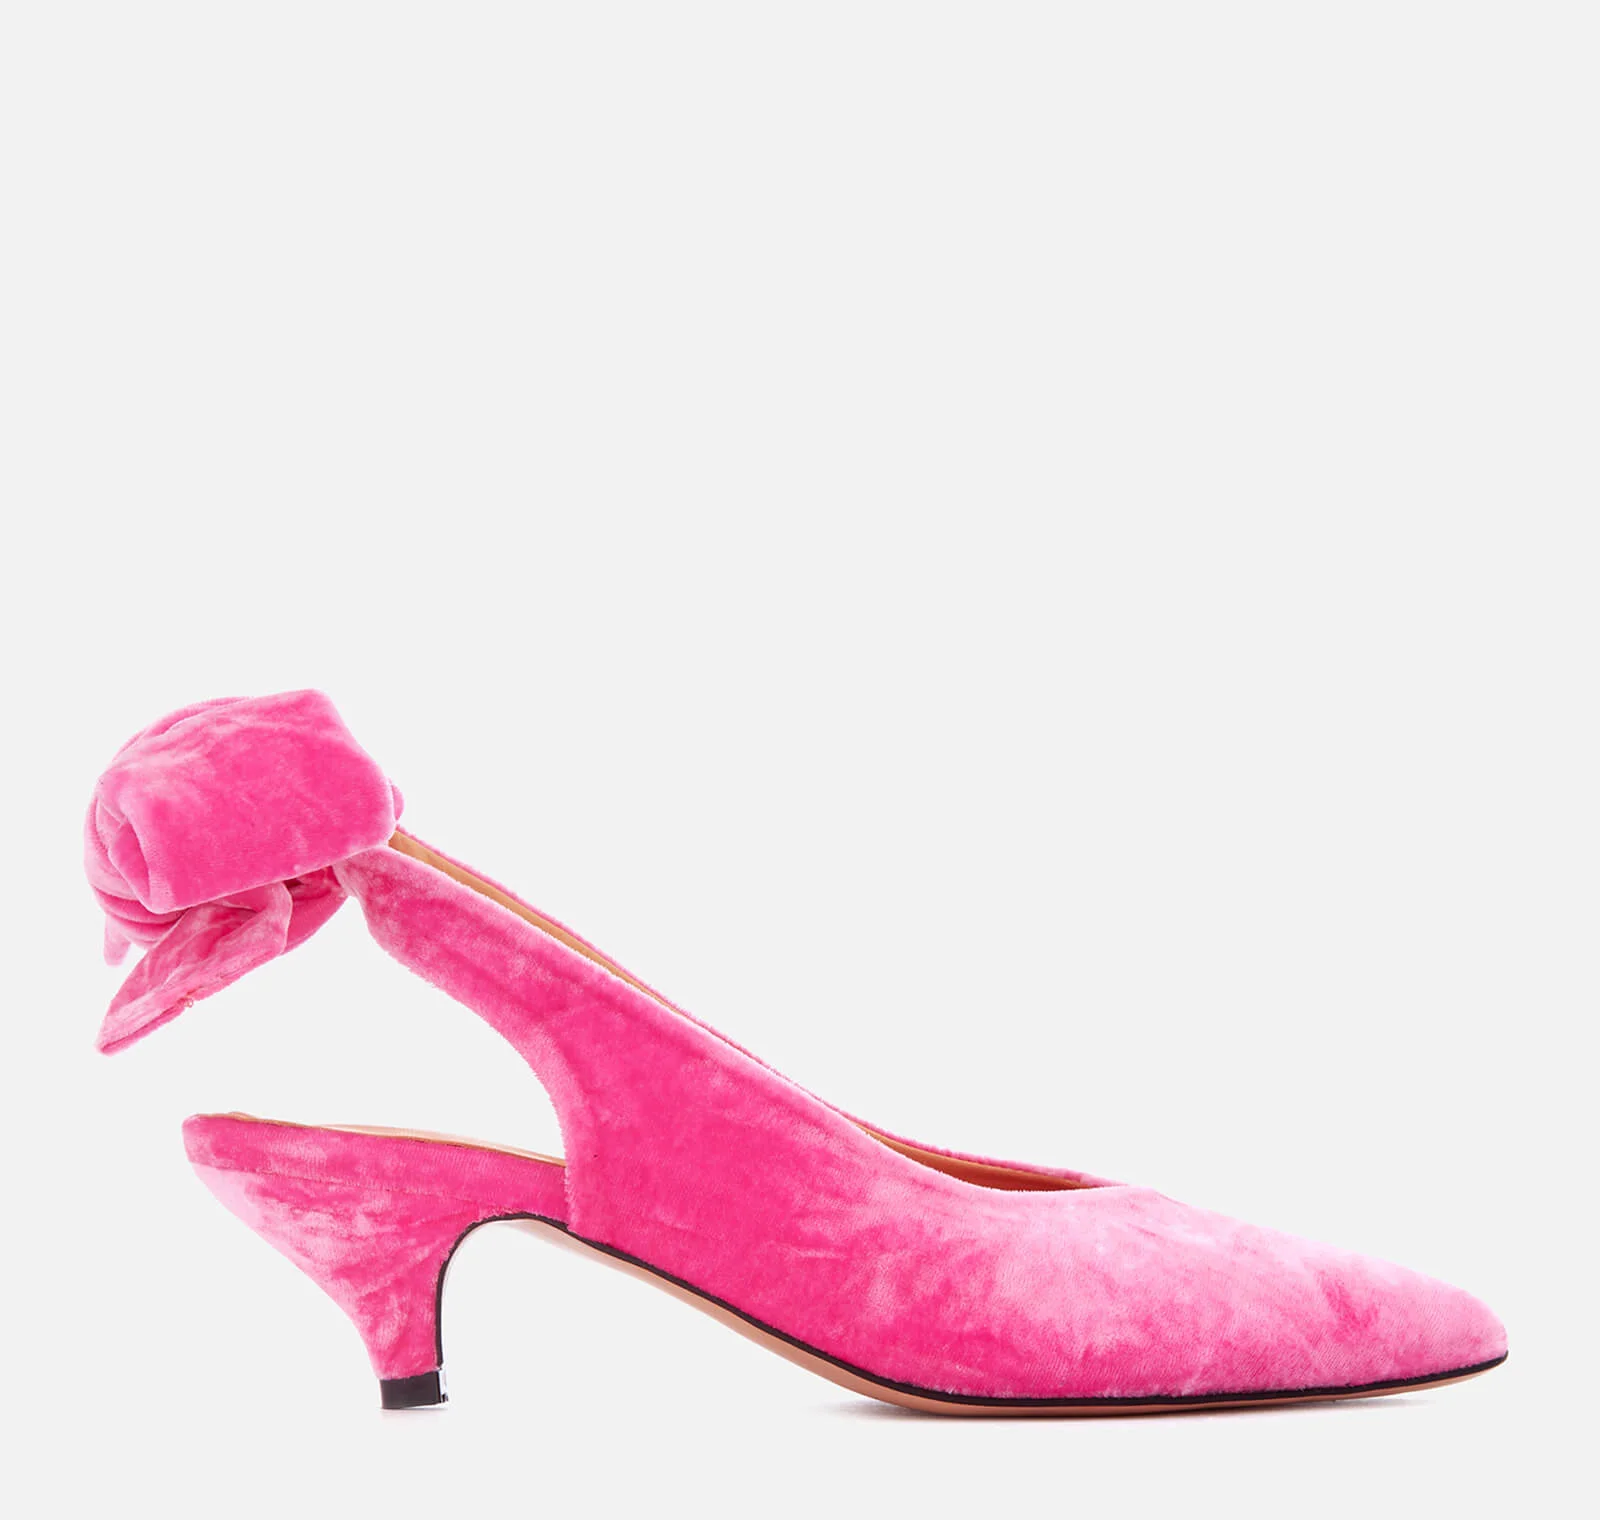 Ganni Women's Sabine Sling Back Kitten Heels - Hot Pink Image 1